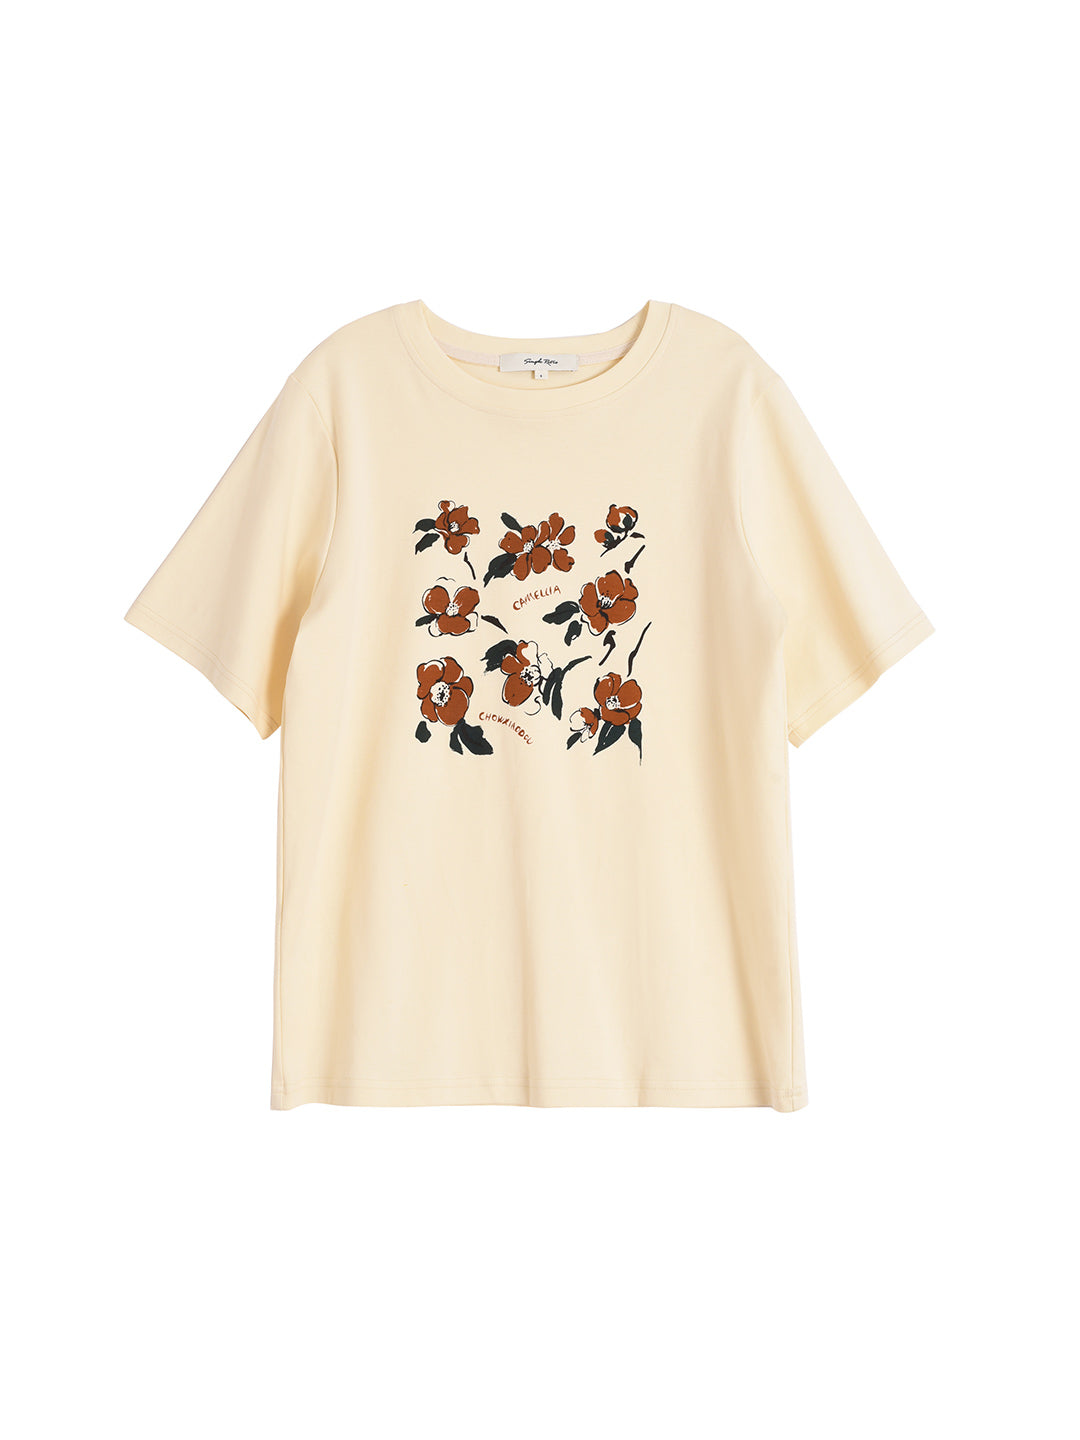 Chowxiaodou Camellia Graphic T-Shirt – Simple Retro